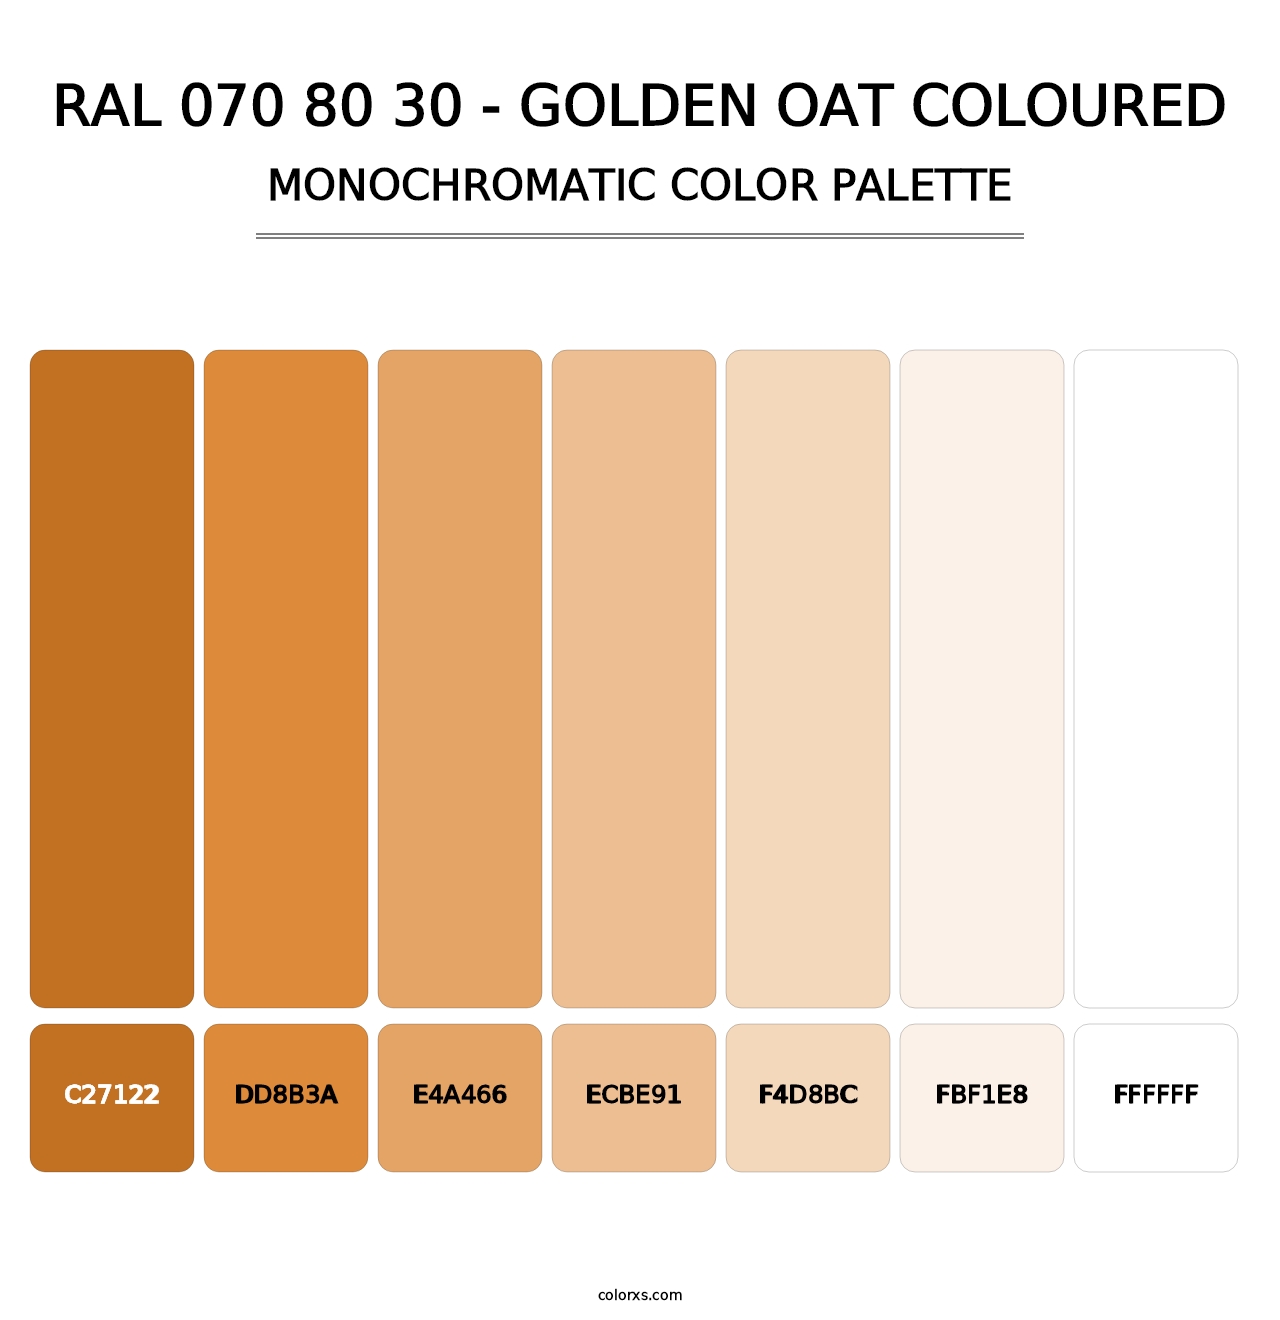 RAL 070 80 30 - Golden Oat Coloured - Monochromatic Color Palette